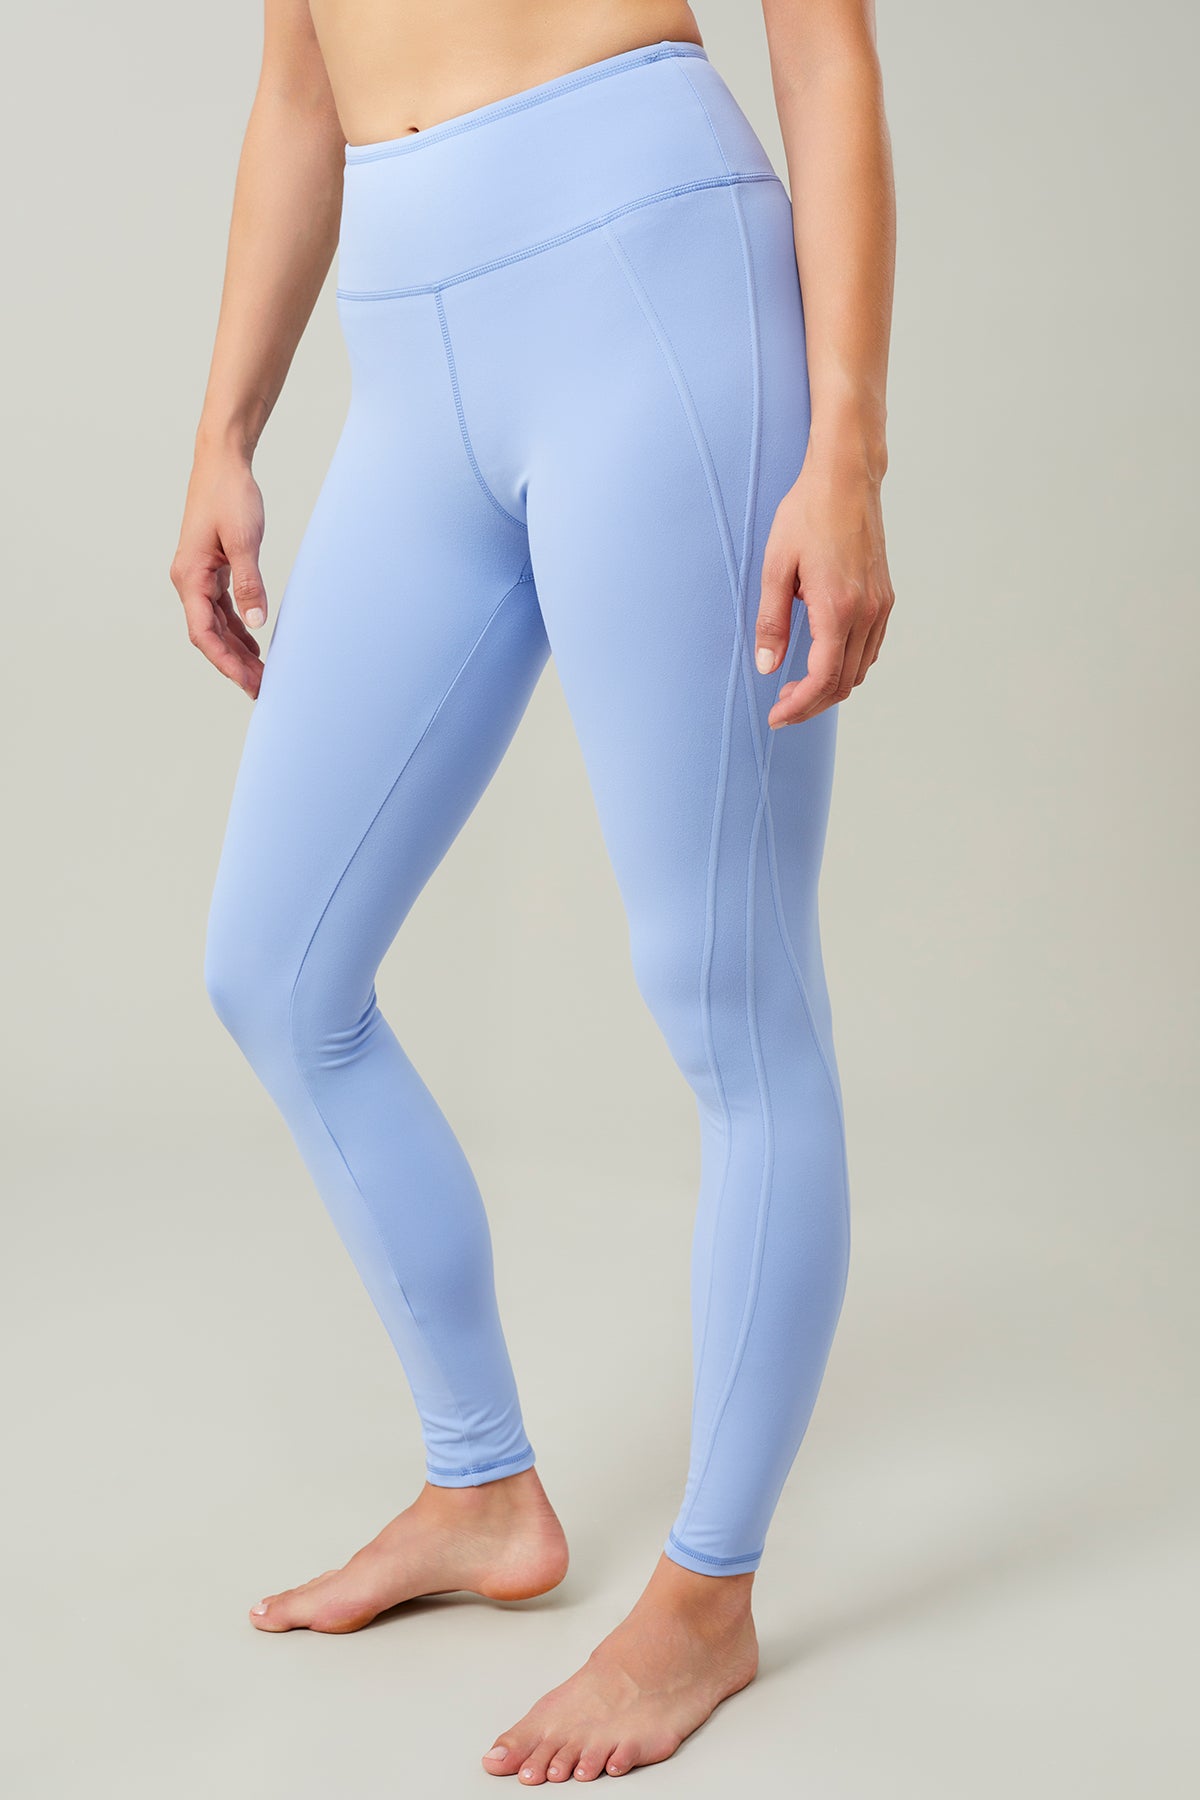 Mandala Yoga Legging Blau Front - Miami Pants